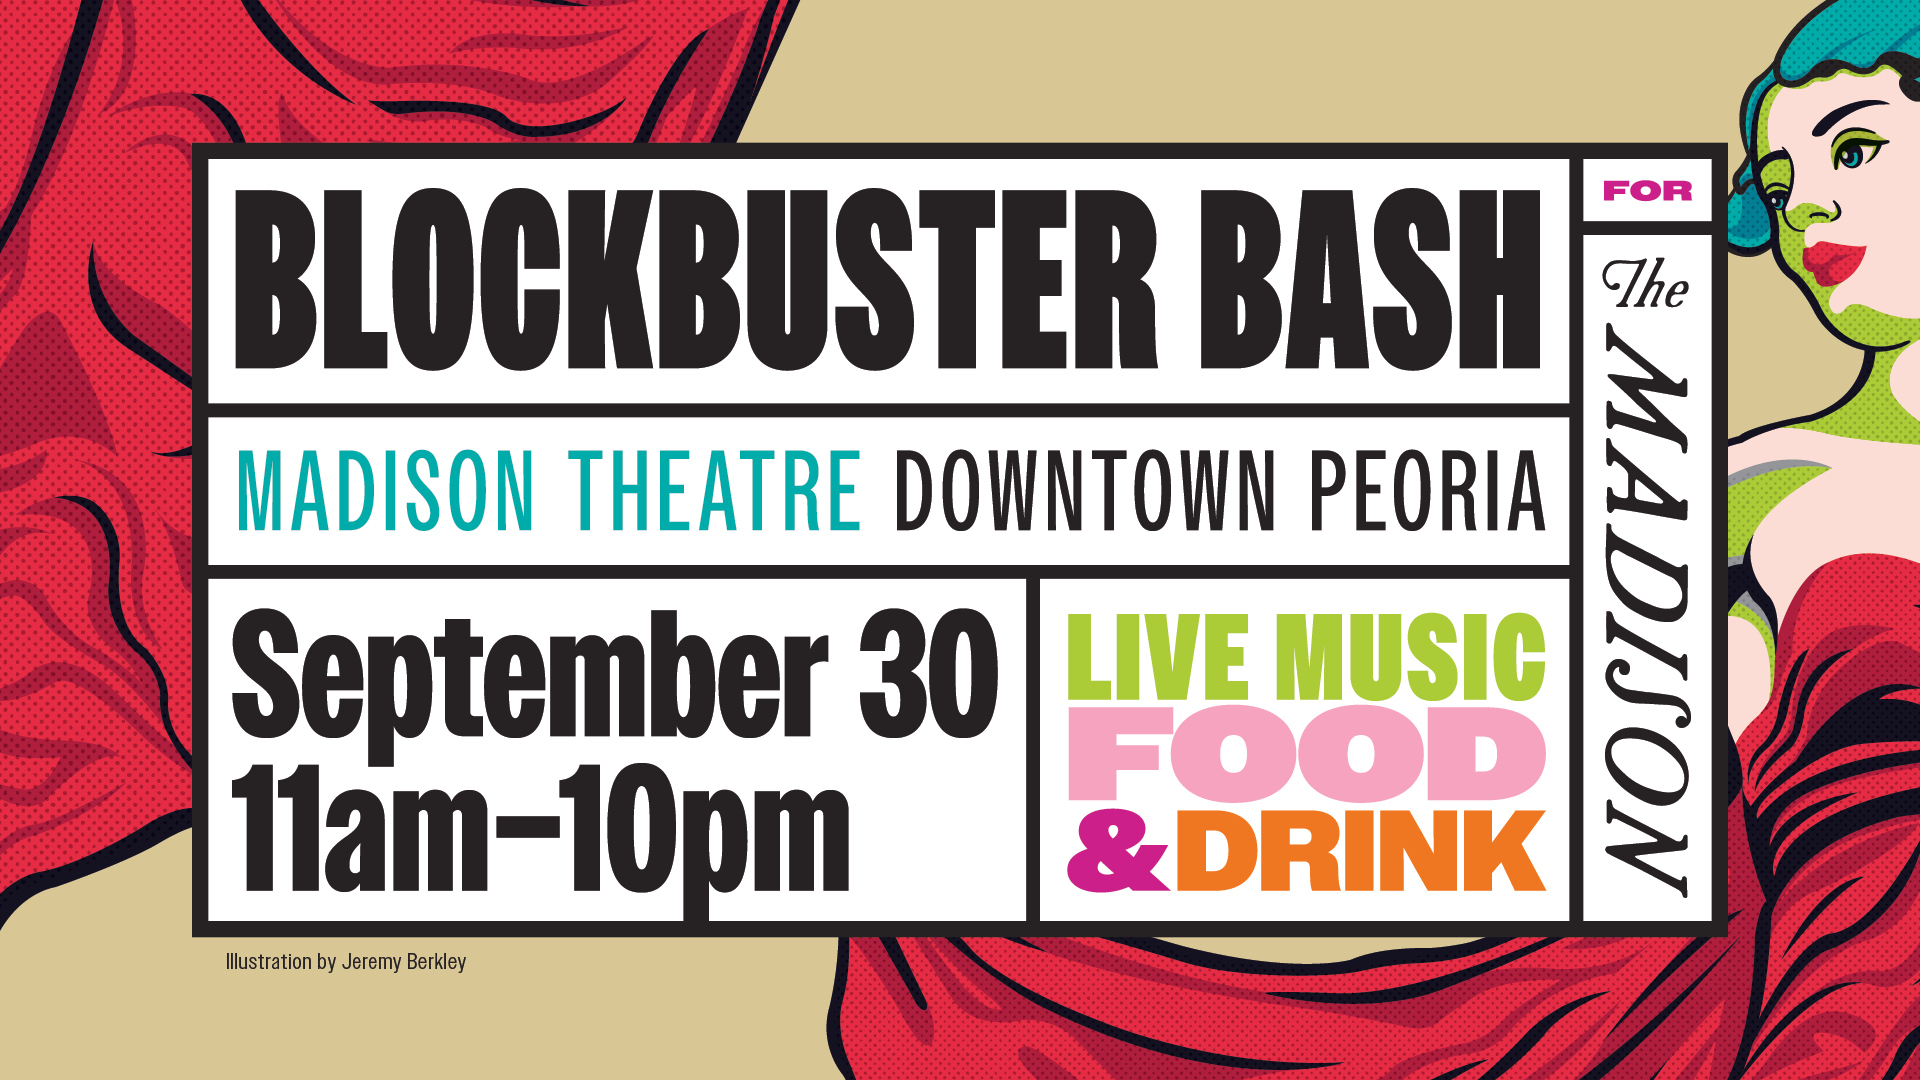 The Blockbuster Bash For The Madison, Peoria, Illinois, United States